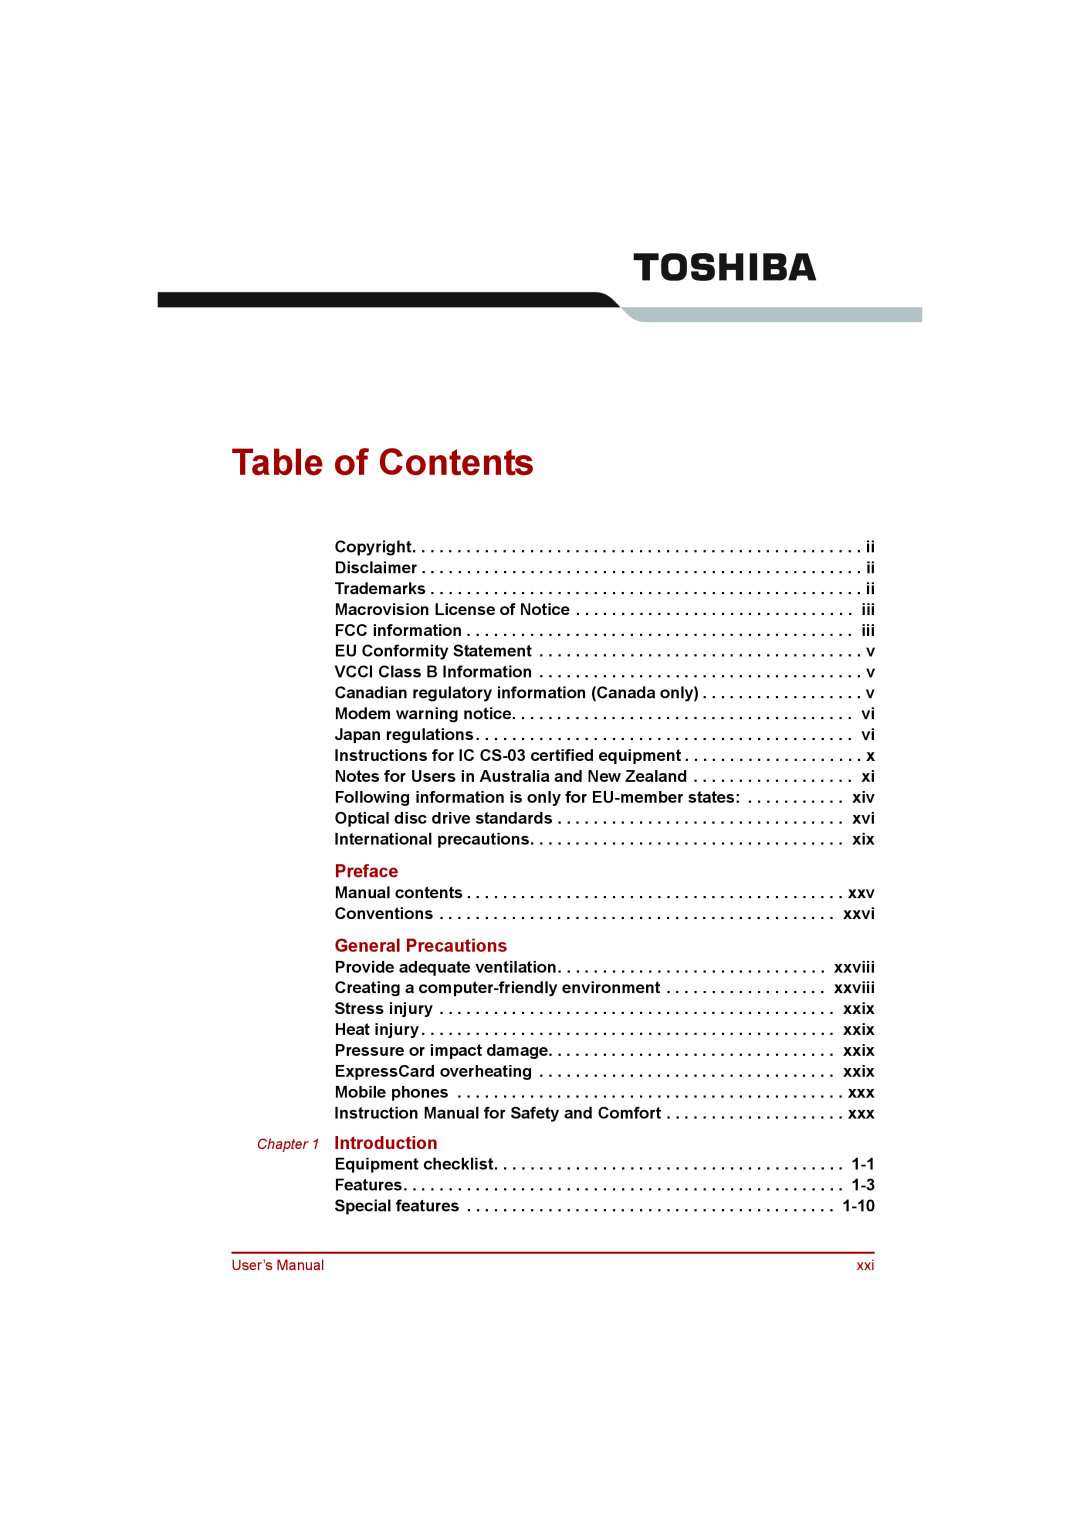 Toshiba toshiba satellite l550/ satellite pro l550/ satellite l550d/ satellite pro l550d series Table of Contents, Preface 